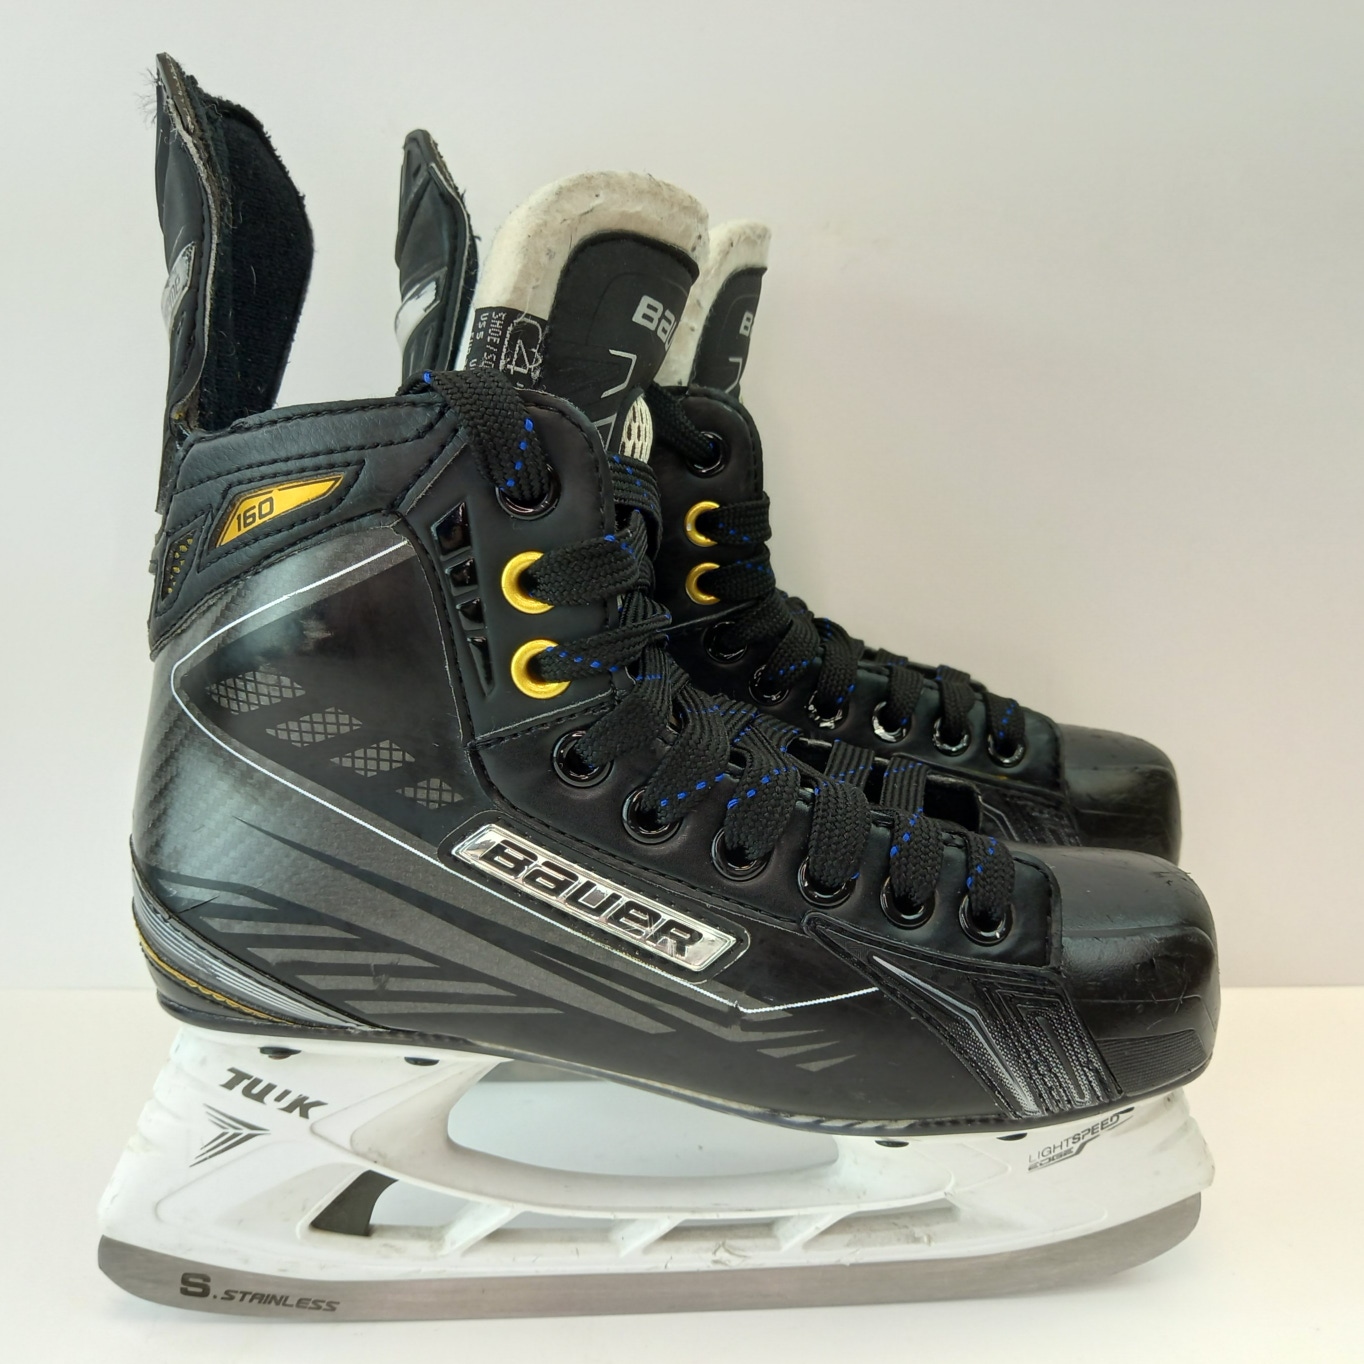 Junior Used Bauer Supreme S160 Hockey Skates Size 4 Skate (Men 5.5 US Shoe Size)